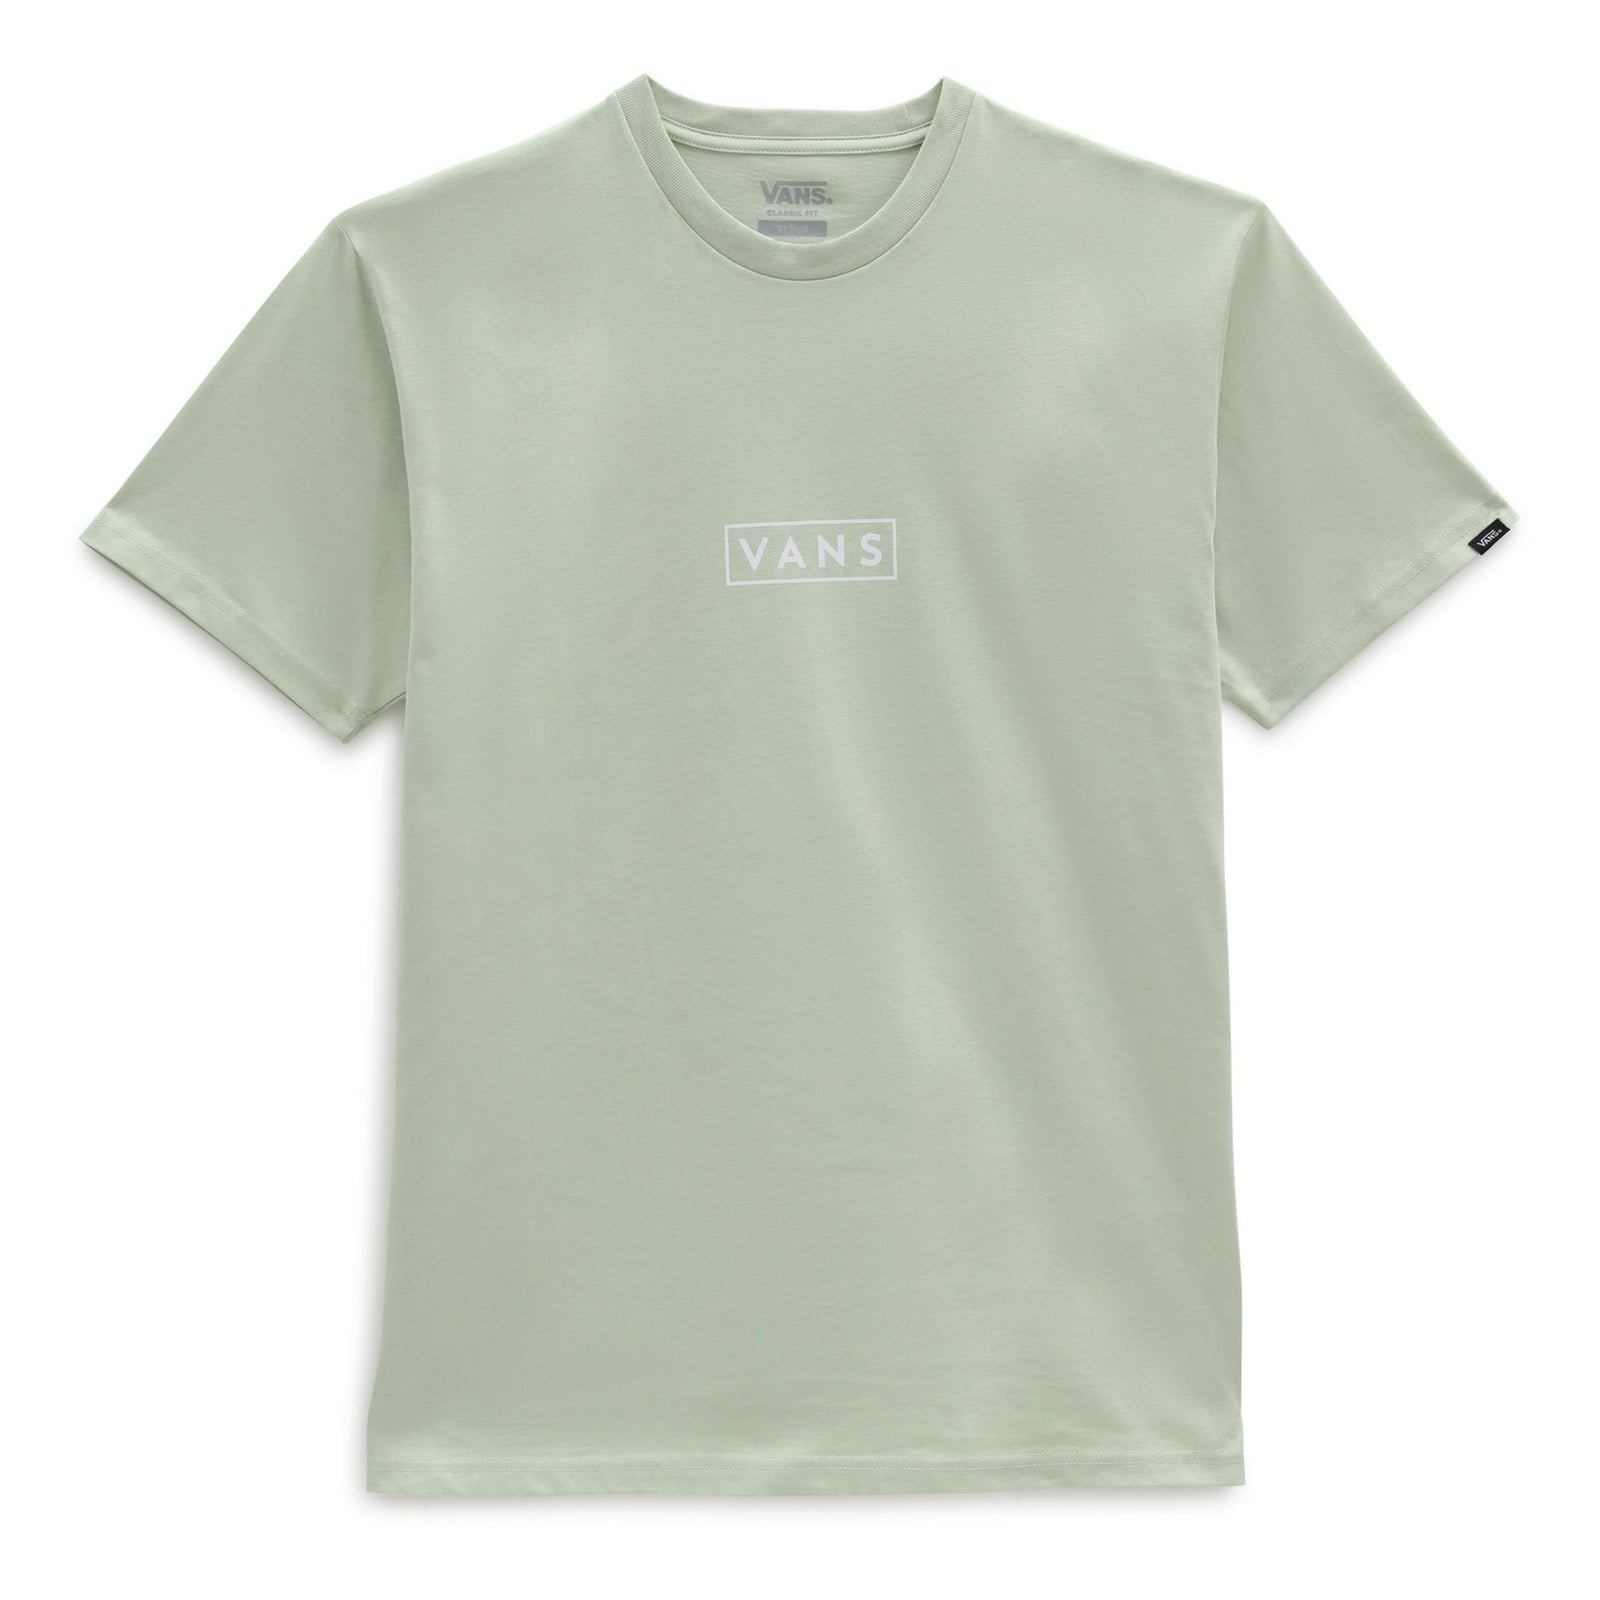 Vans Frequency T-Shirt - Saffron